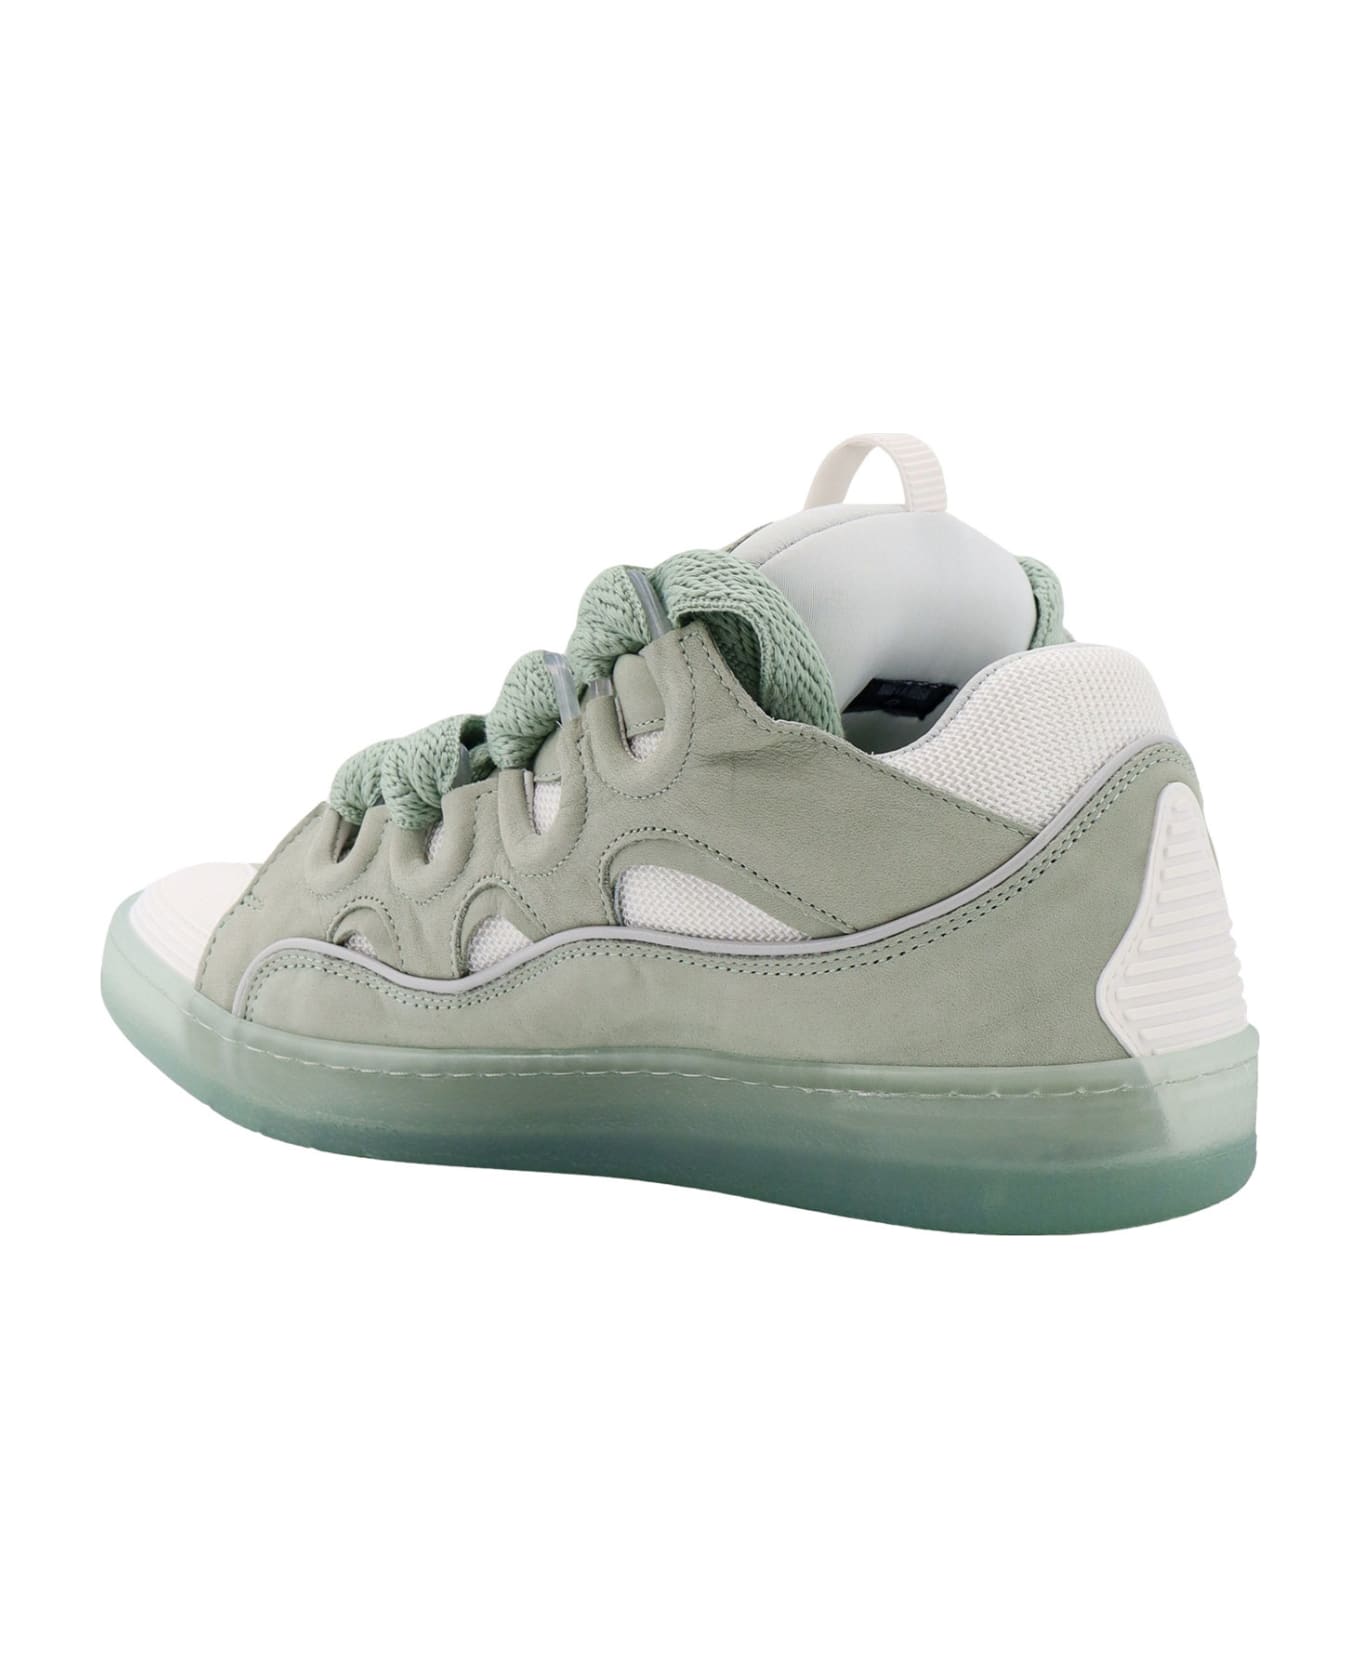 Lanvin Curb Sneakers - Green